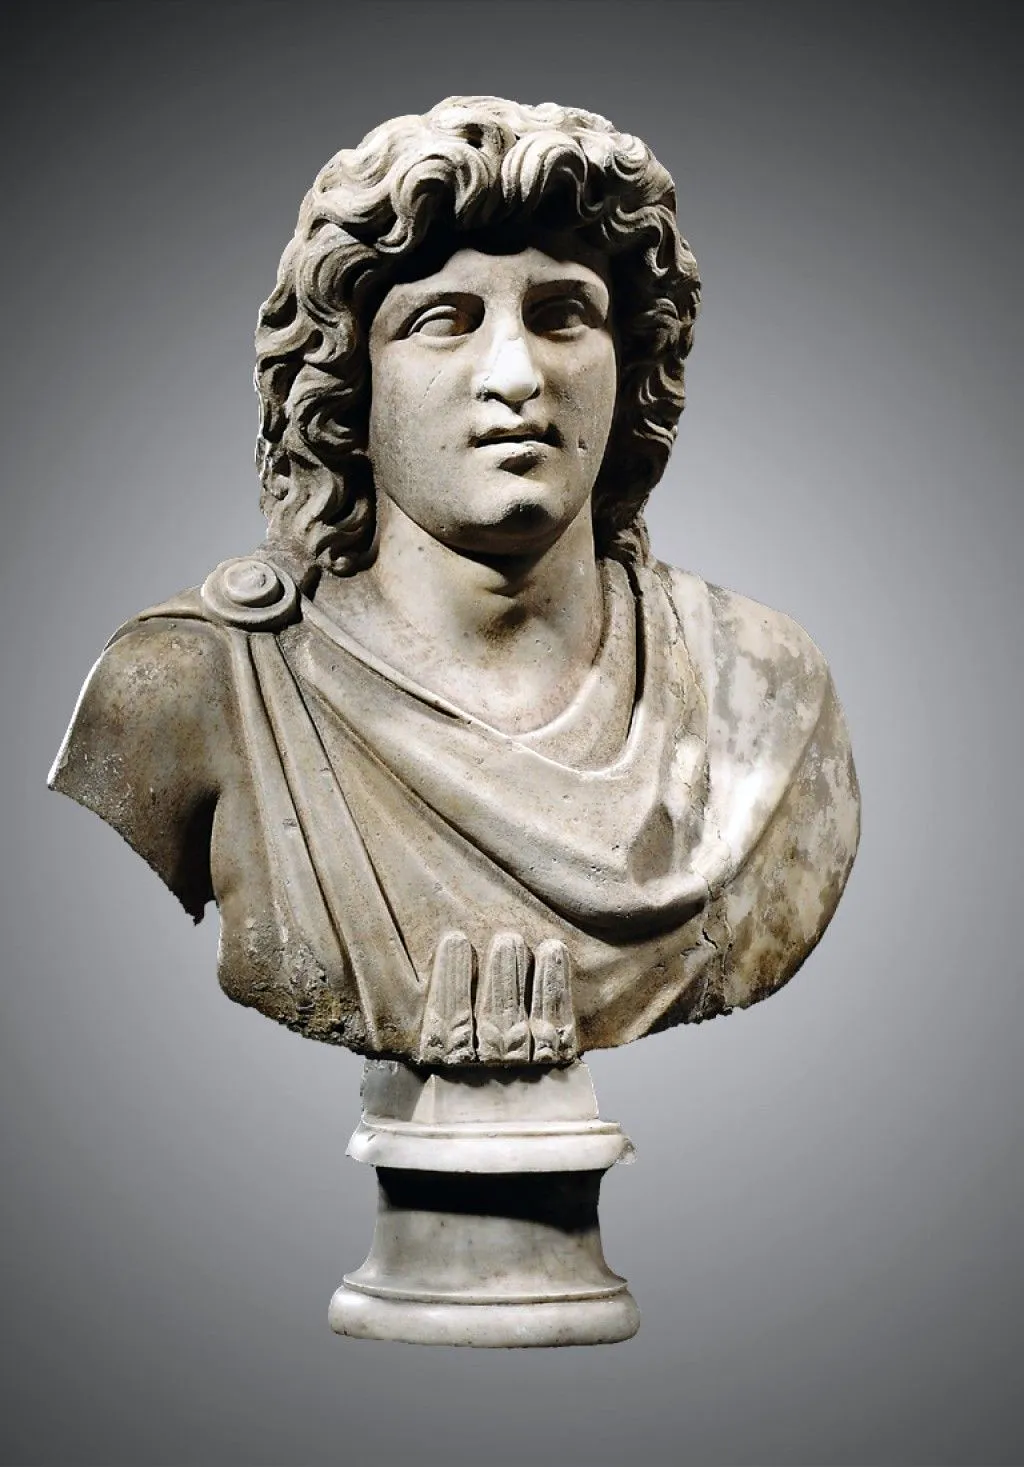 Александр Великий